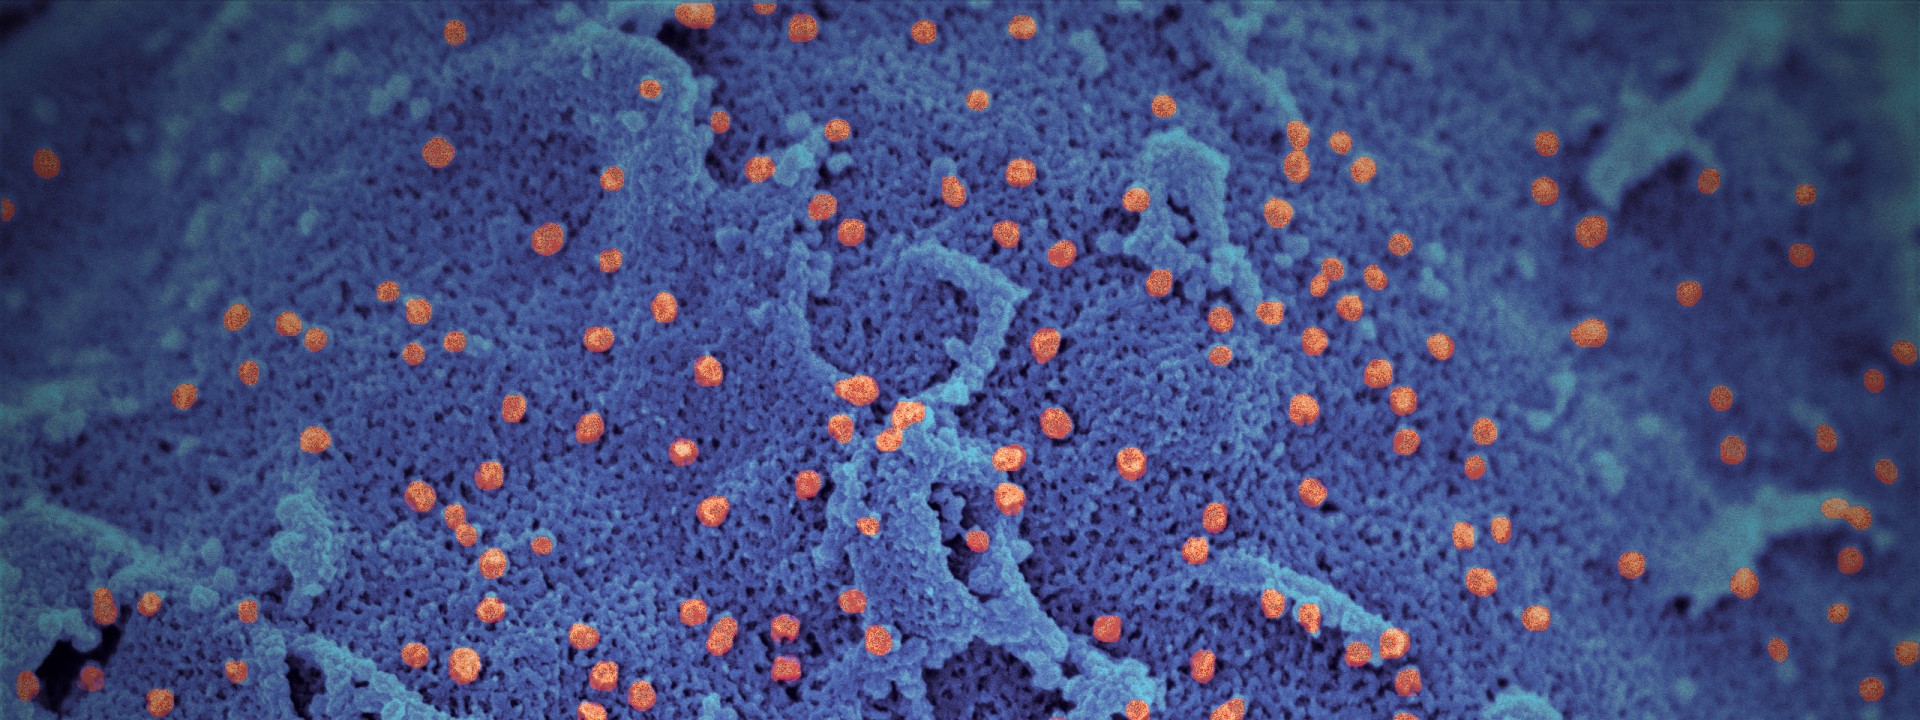 Microscopic view of the SARS-CoV-2 virus.